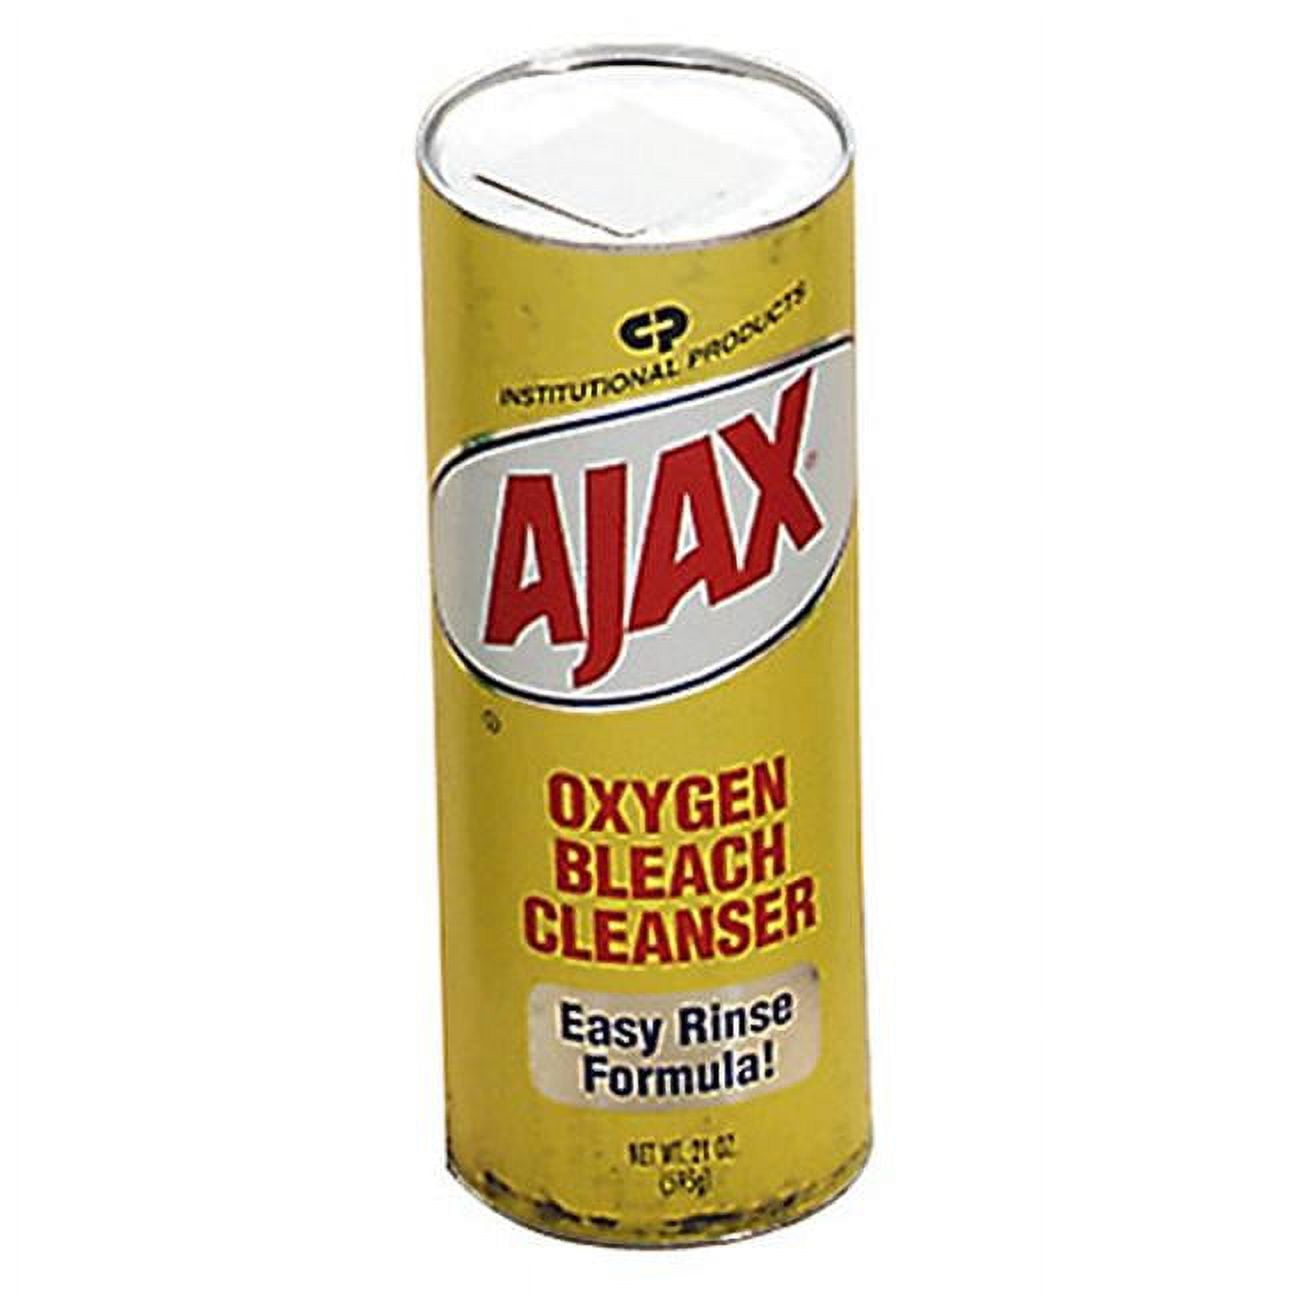 Colgate-palmolive 14278 21 Oz Ajax Cleanser Powder - Case Of 24